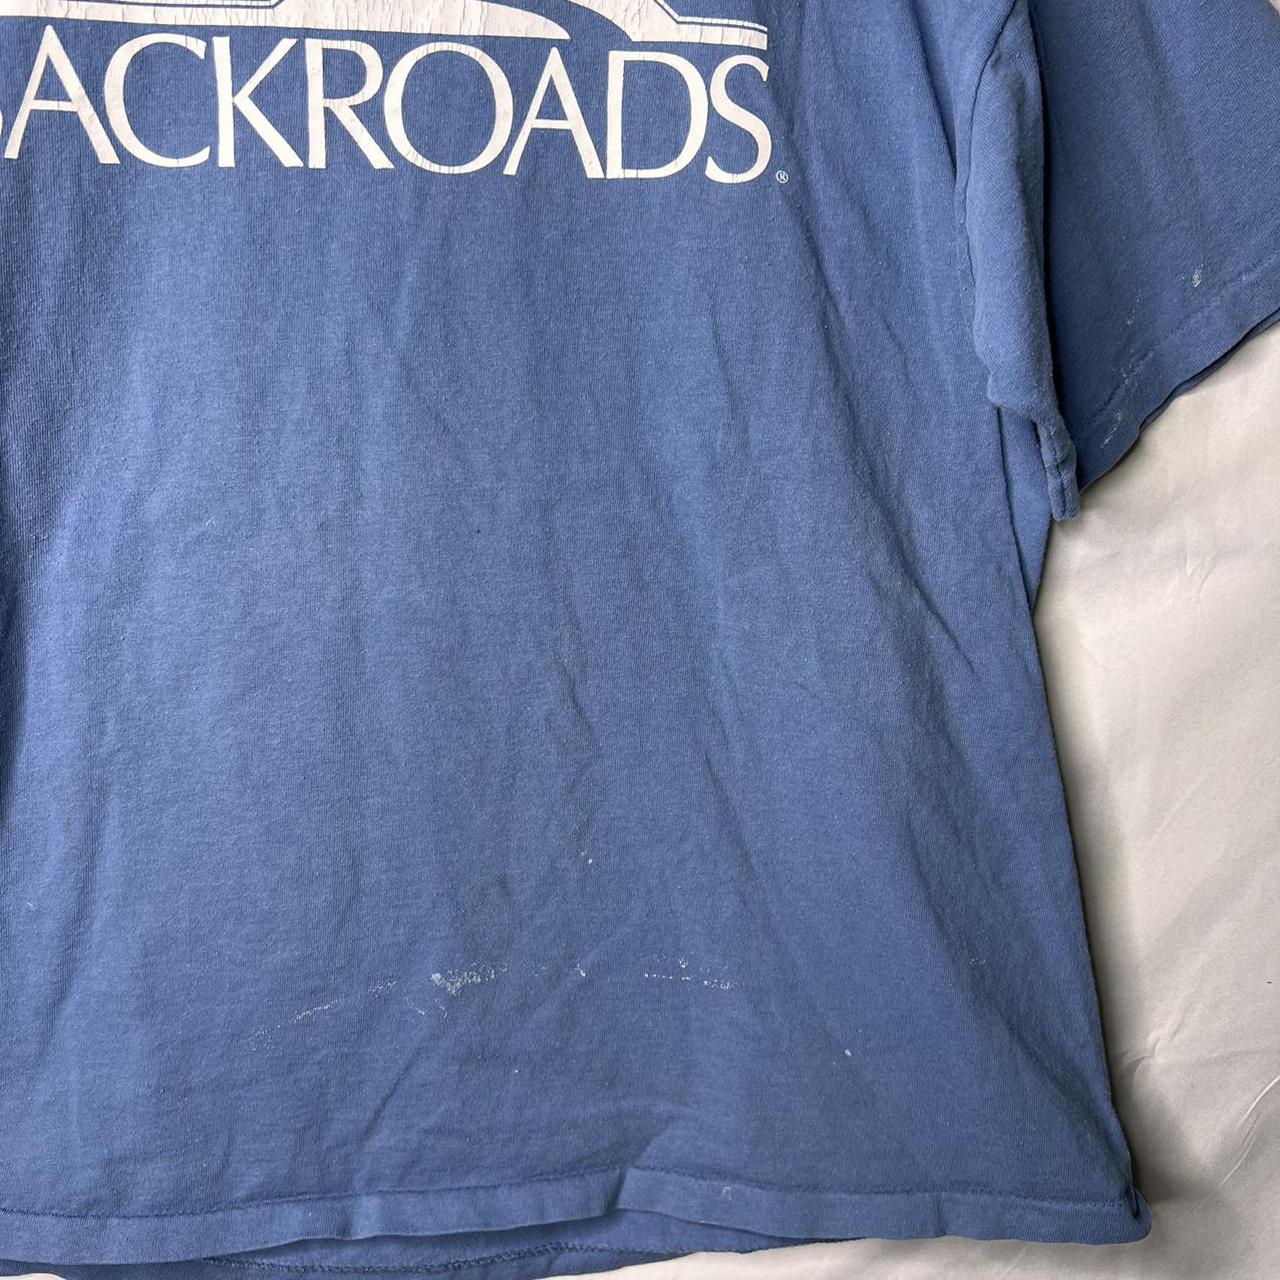 Product Image 3 - Vintage 90s “Backroads” Graphic T-Shirt

Size